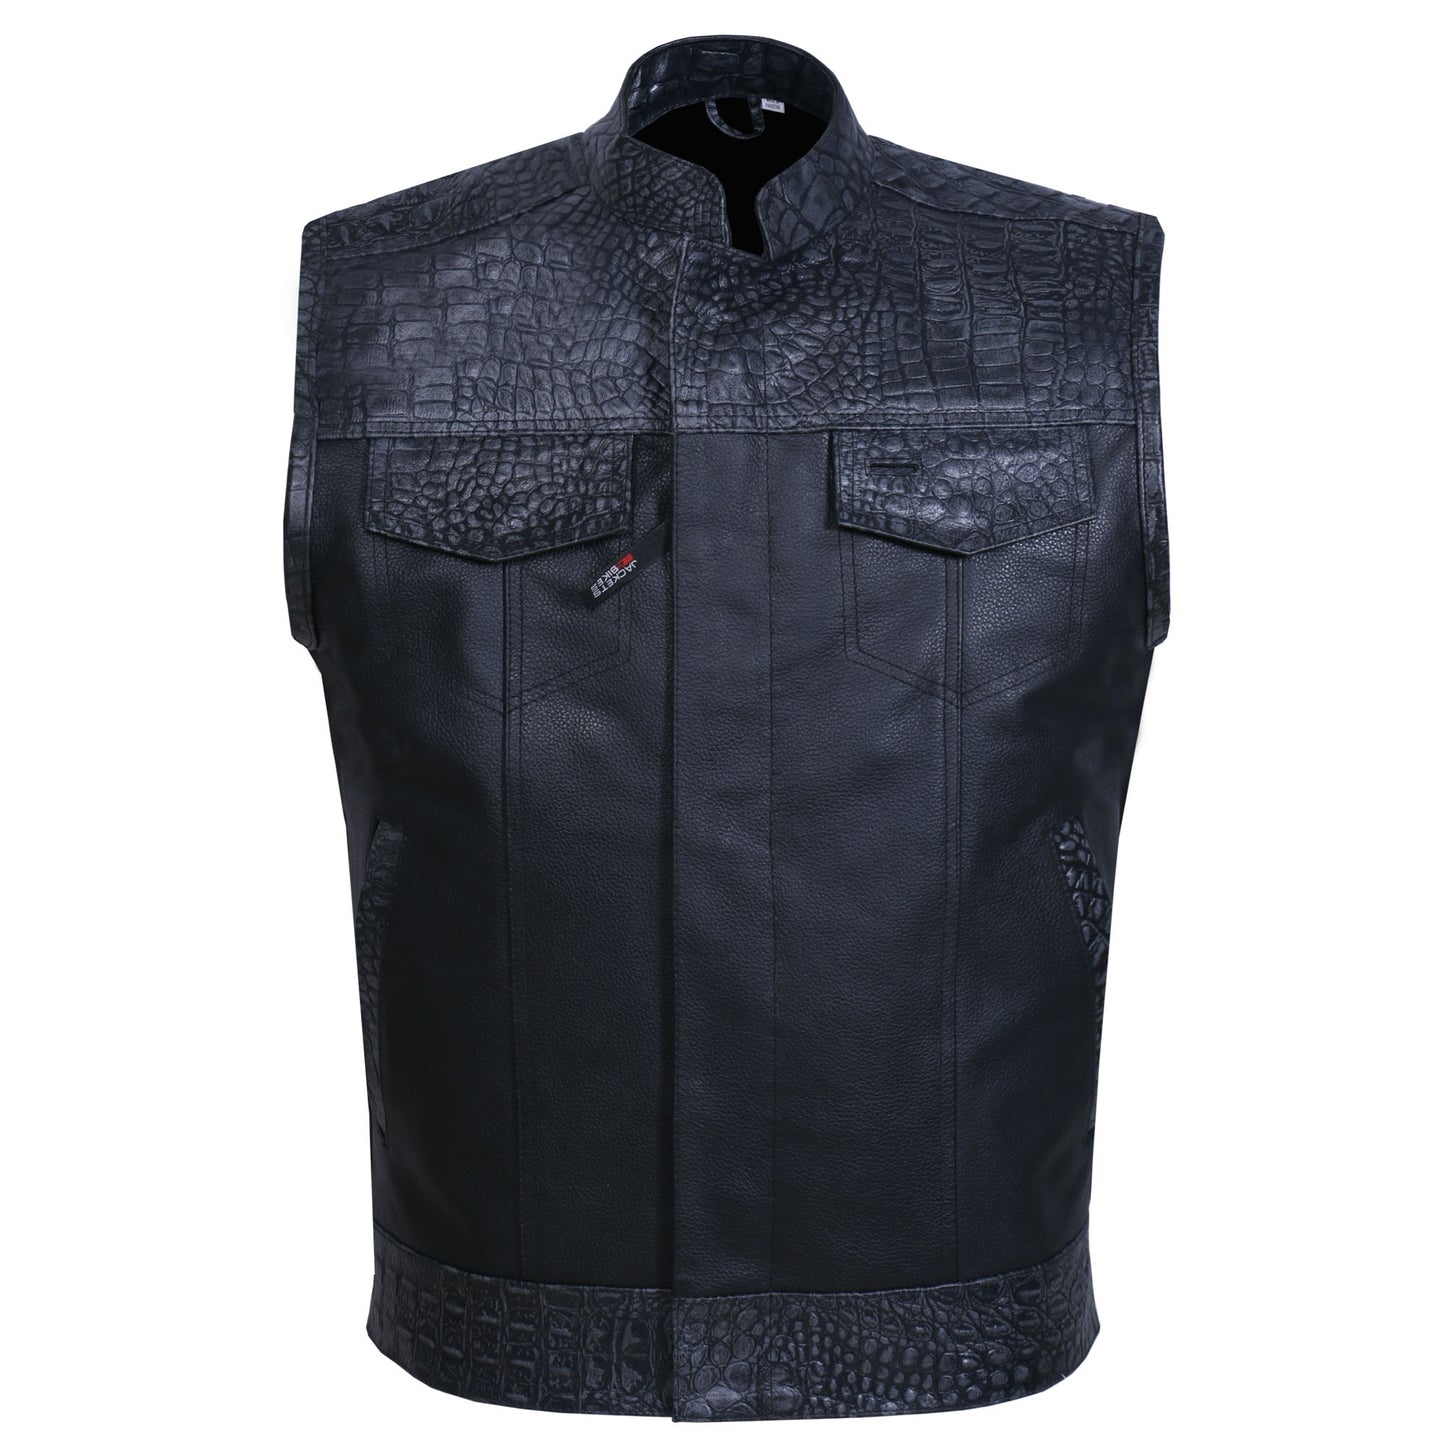 SOA Men's Leather Motorcycle Concealed Gun Pockets Biker Club Vest w/Armor Crocodile Black